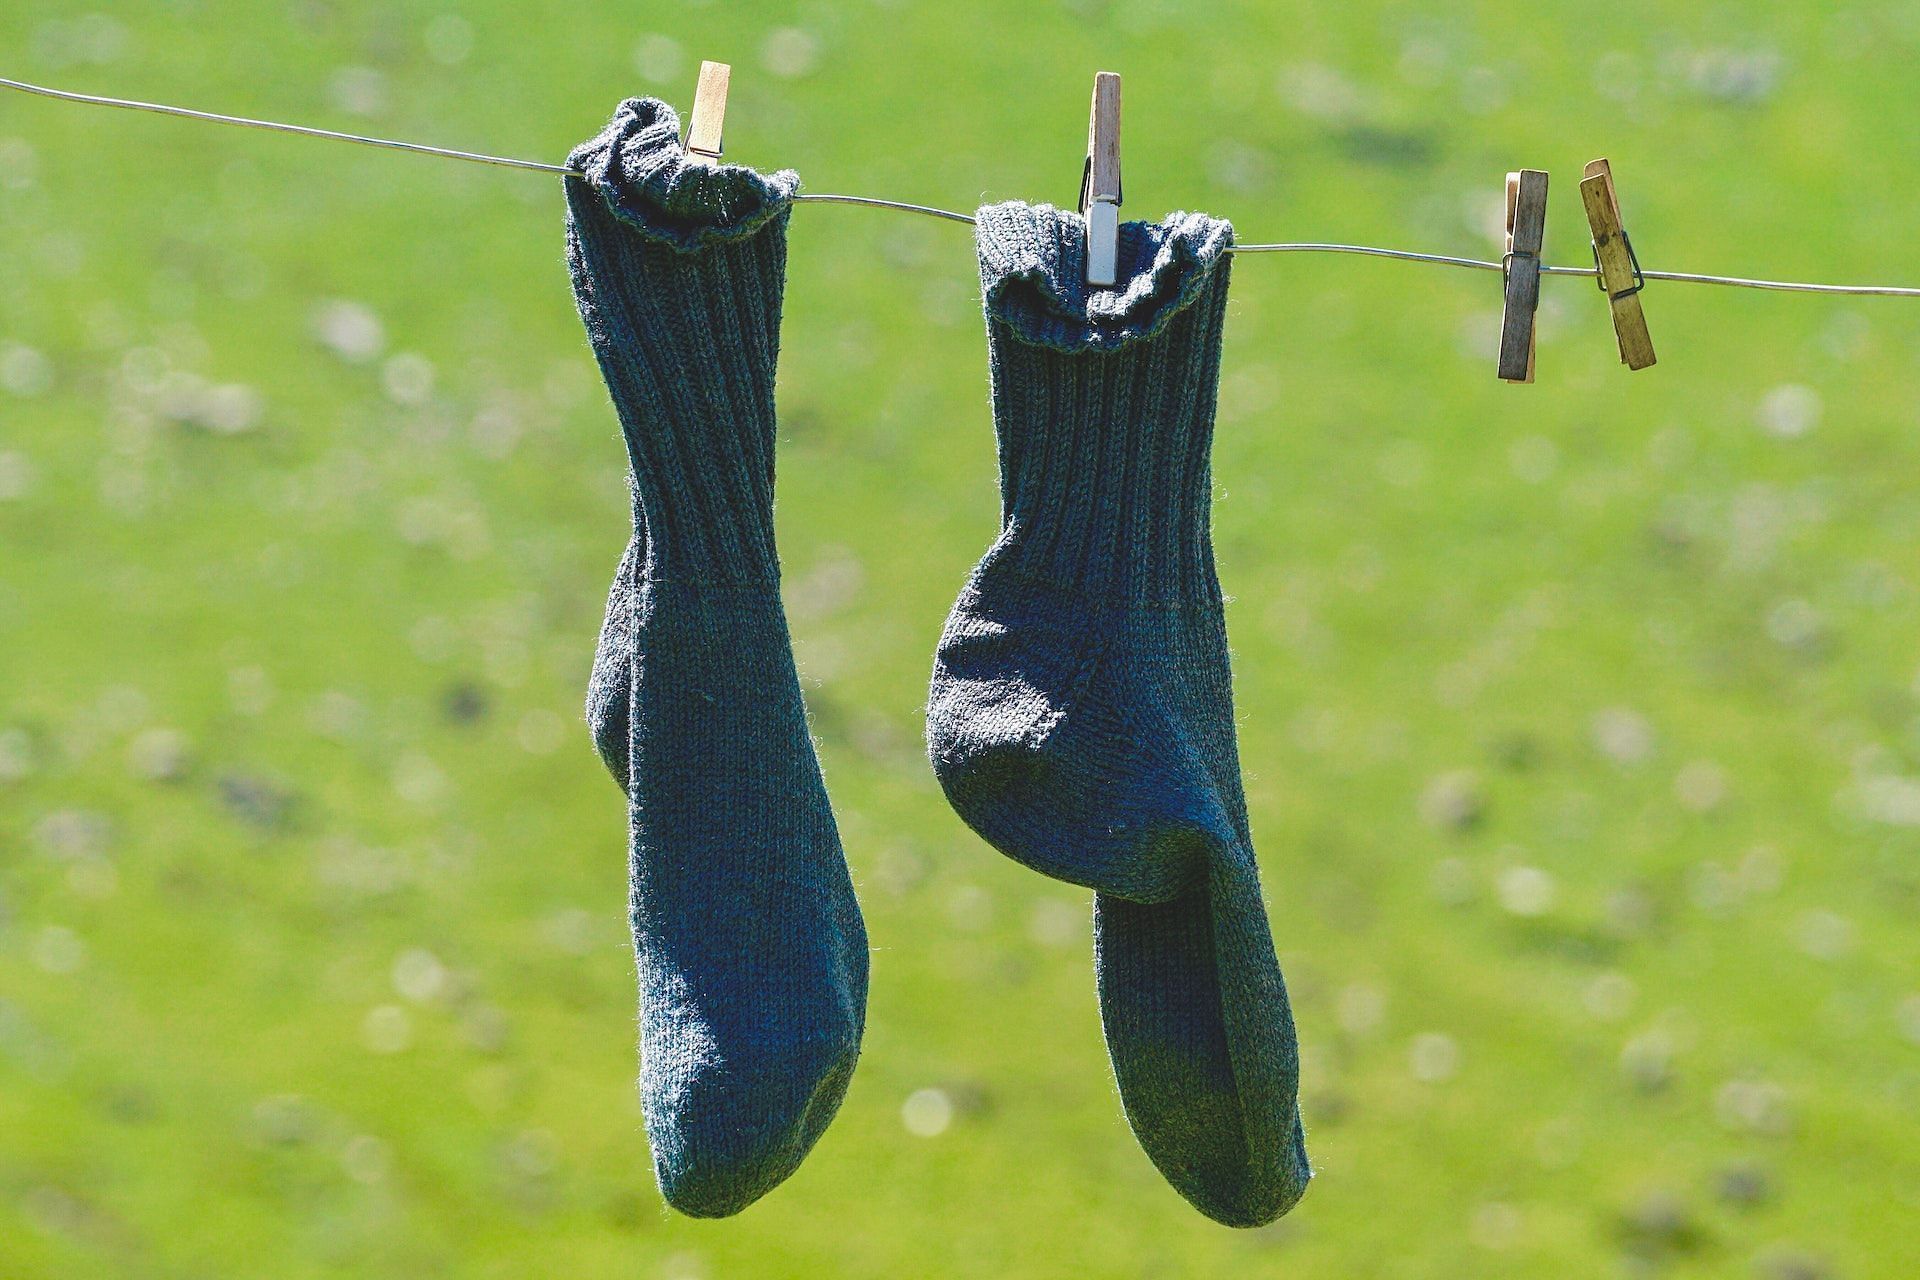 Always wear clean and dry socks. (Photo via Pexels/Susanne Jutzeler, suju-foto)